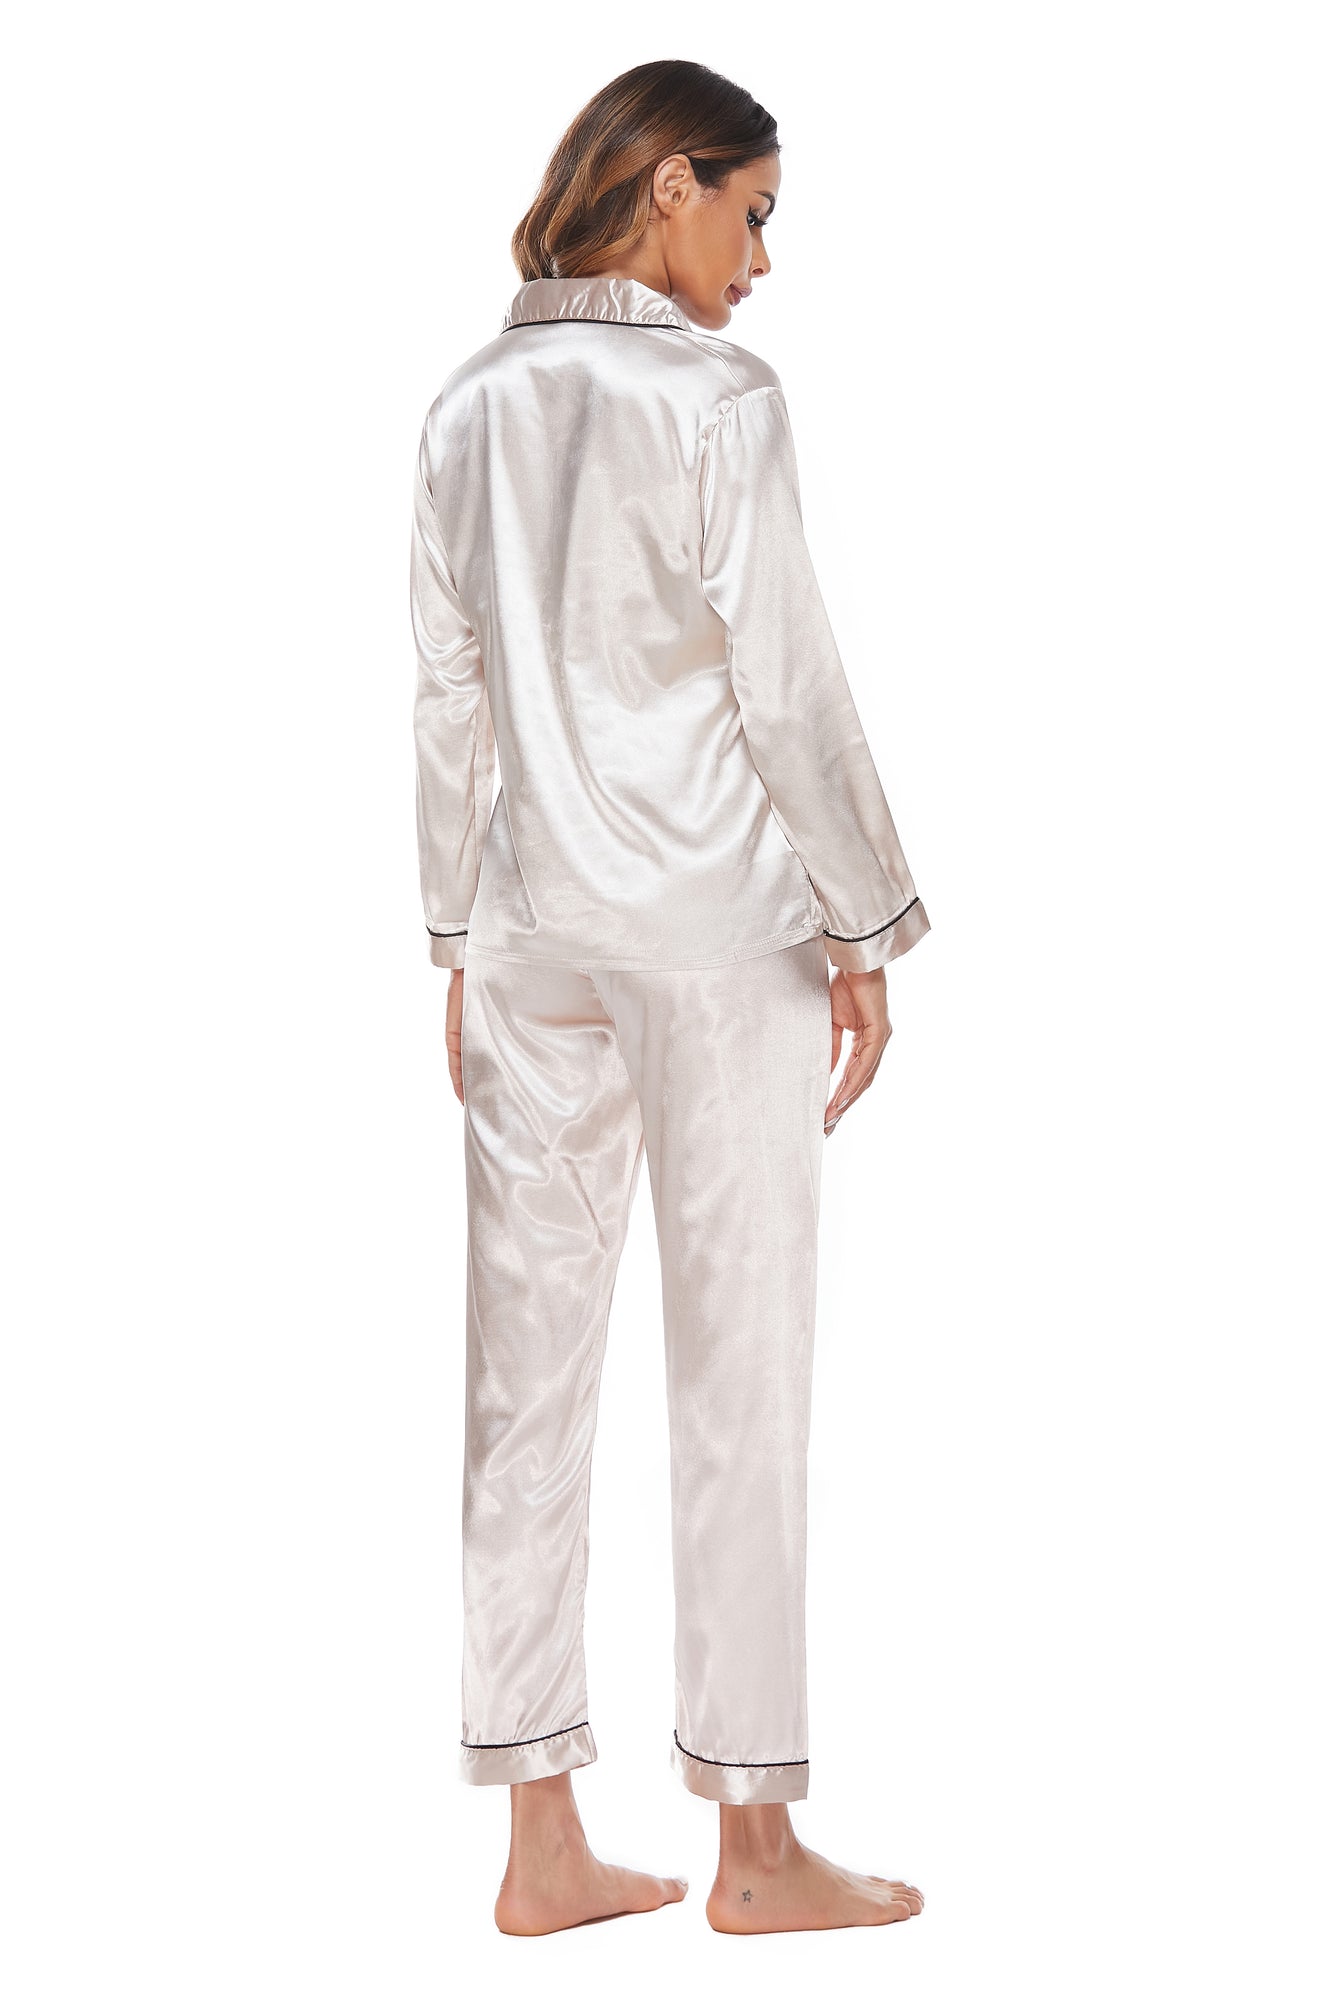 Buy Black Silk Pajamas Short Sleeve Button-Down Satin from Elowel